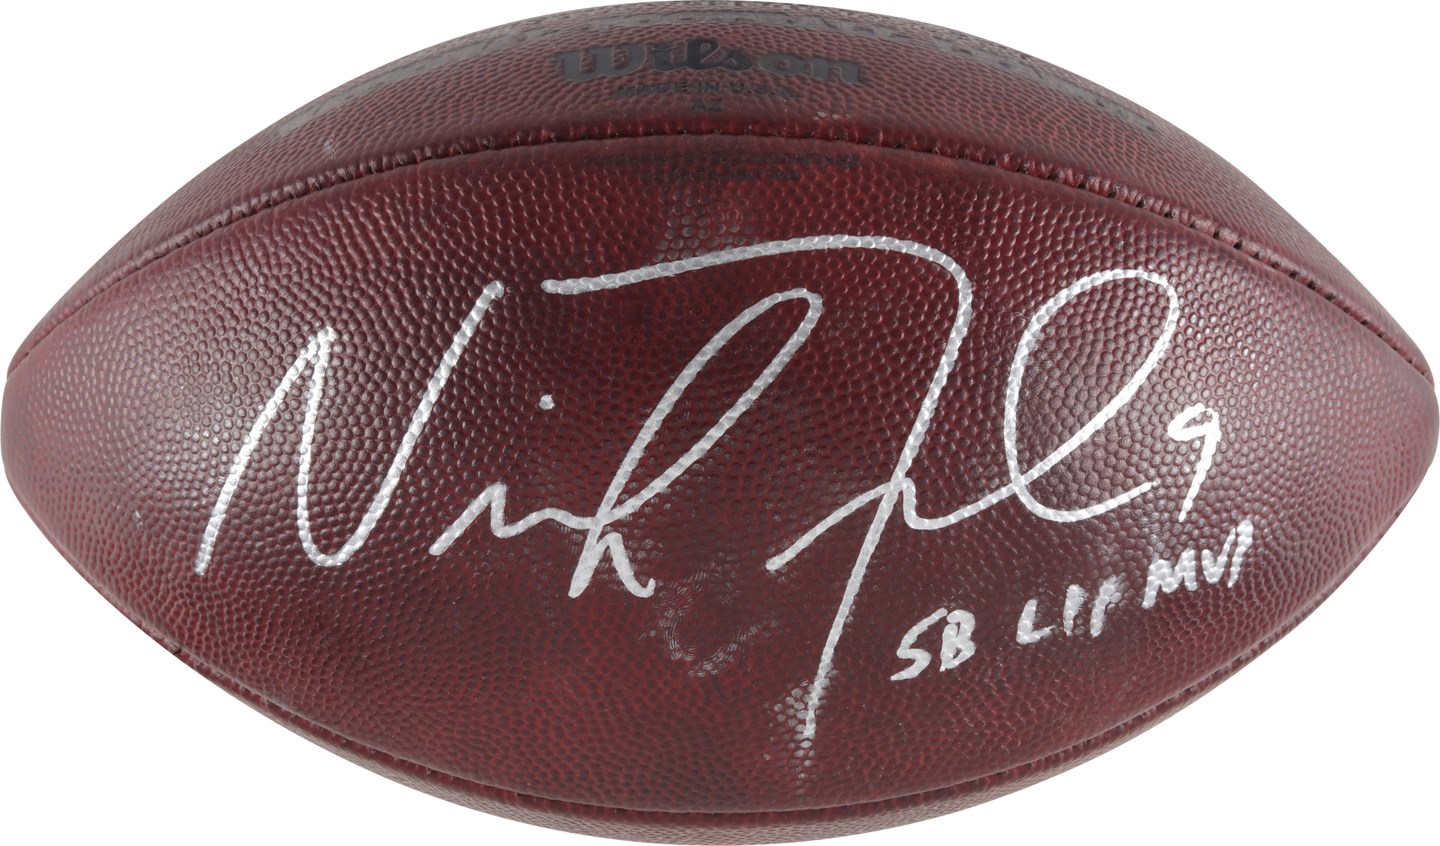 Football - 2018 Super Bowl LI Game Used Football Signed by Nick Foles with "SB LII MVP" Inscription (Fanatics)